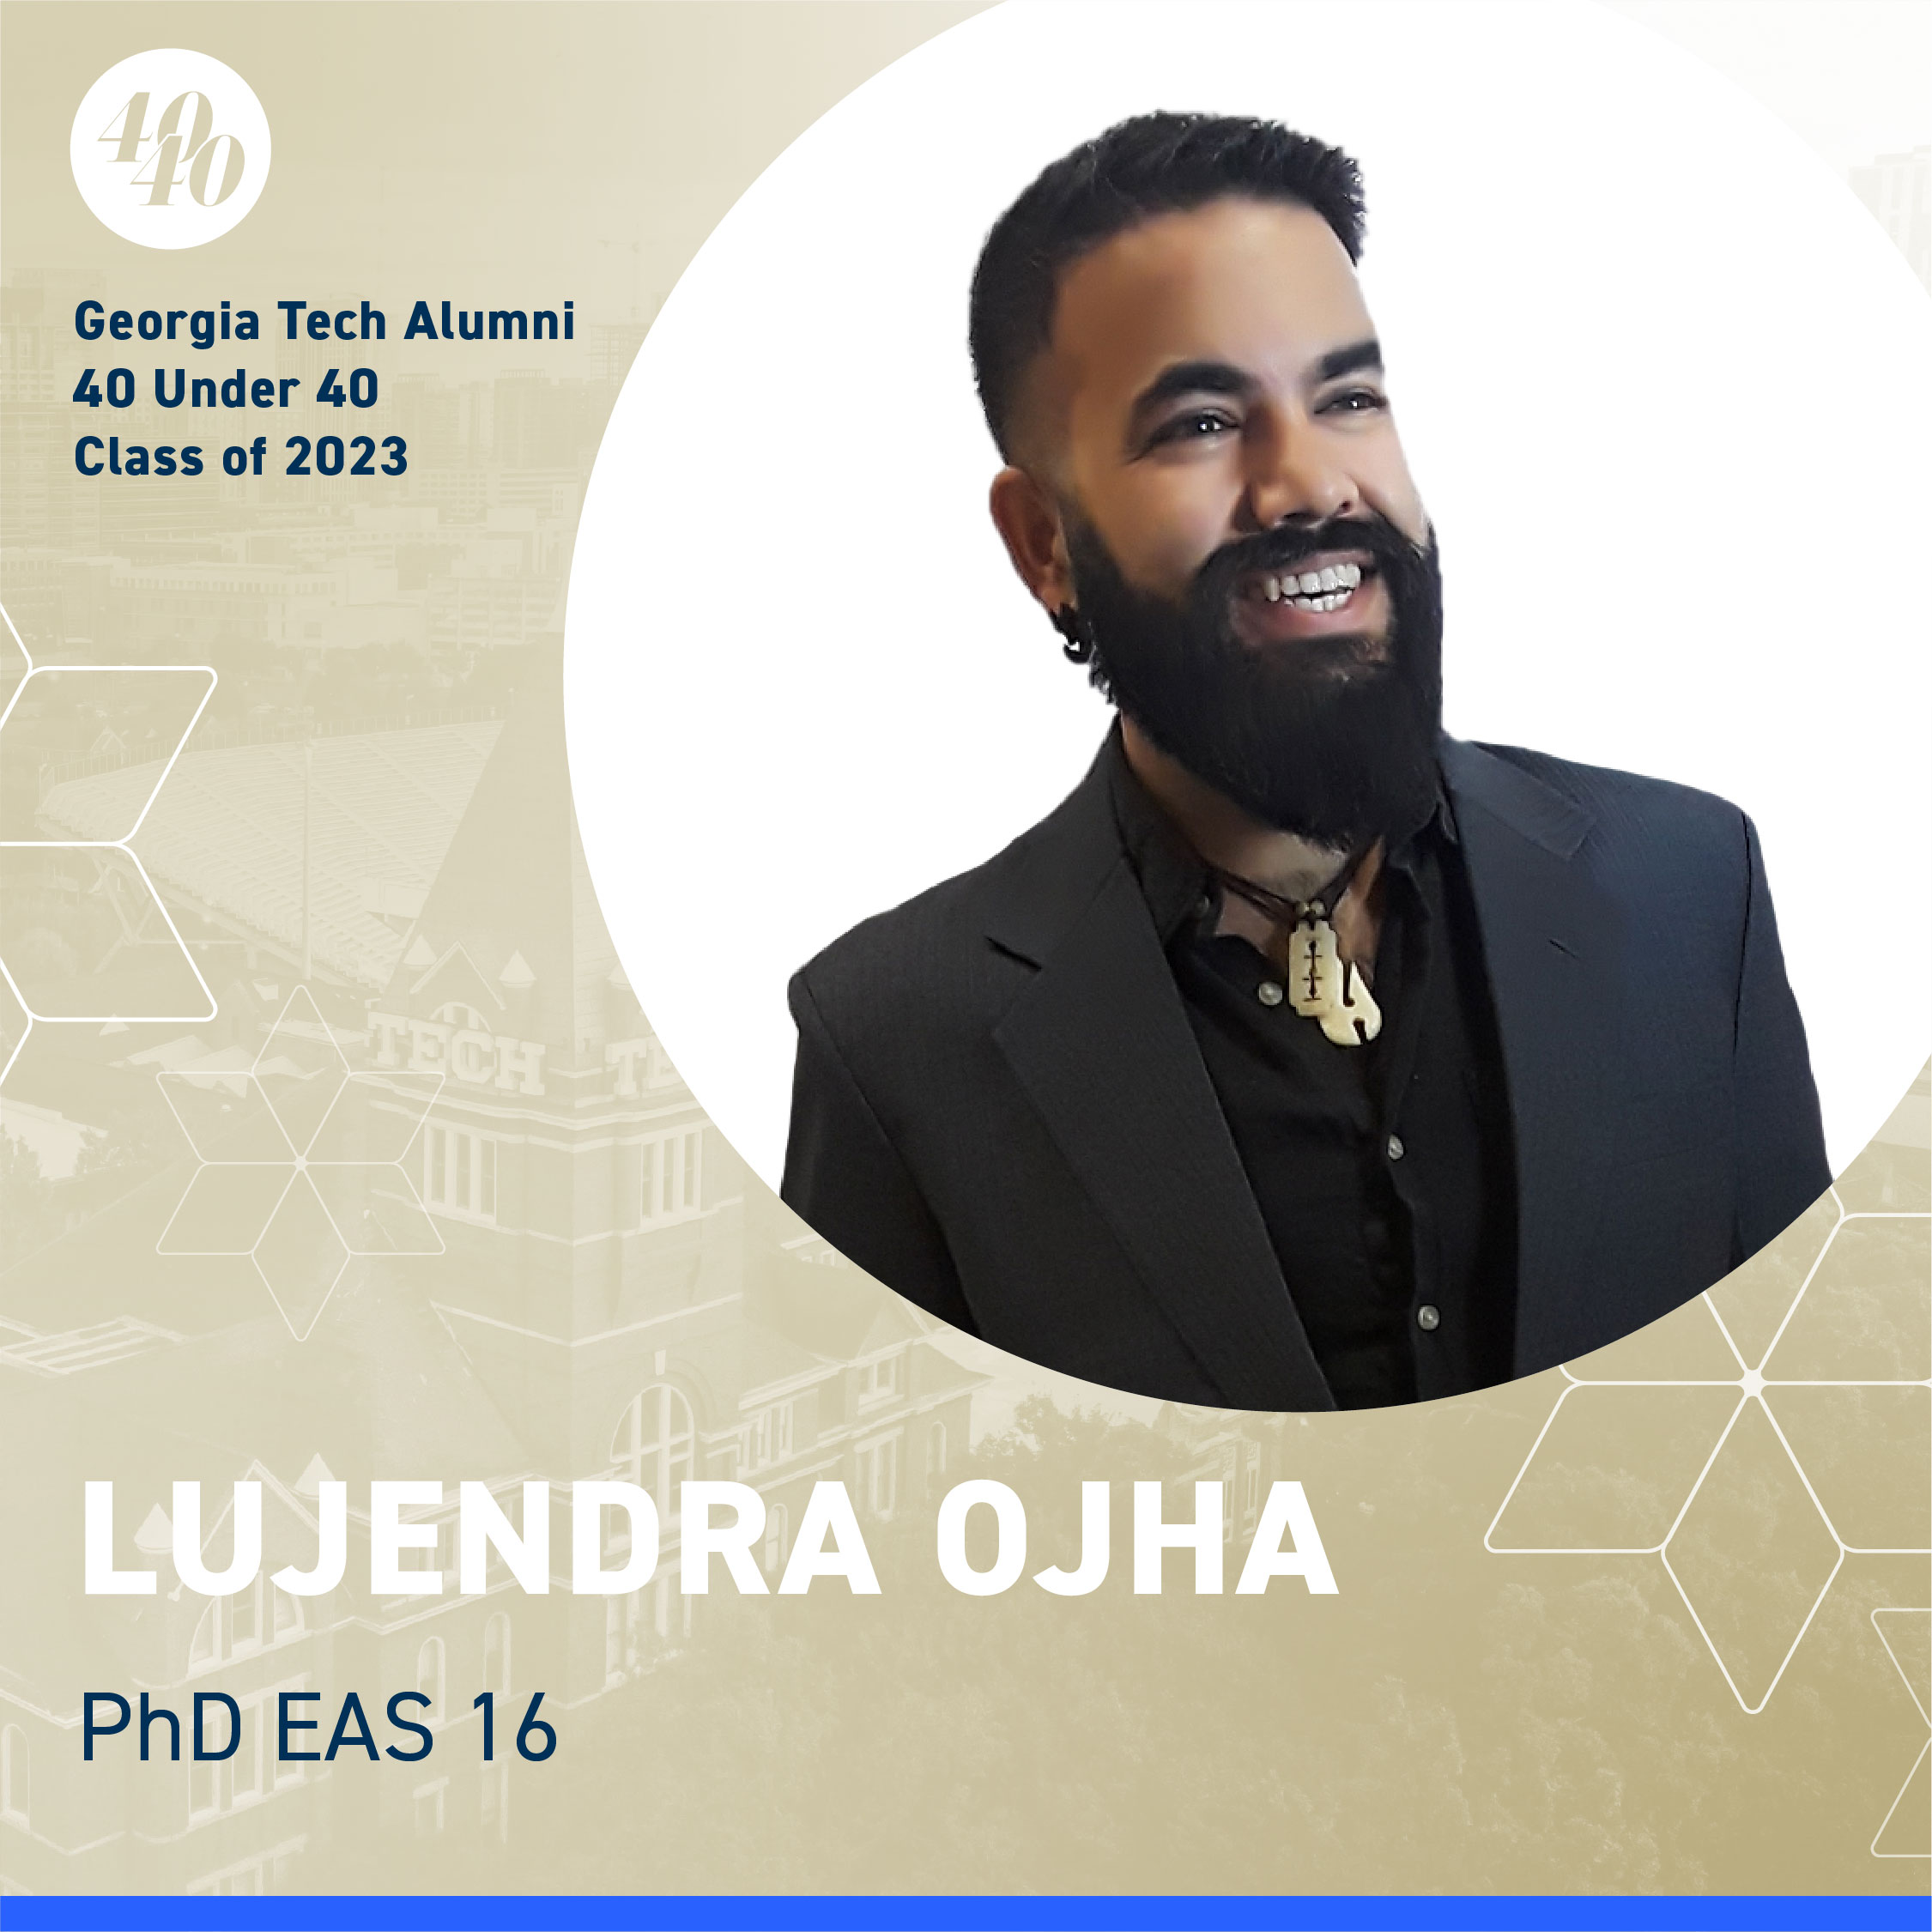 Lujendra Ojha, Ph.D. EAS ‘16 (Assistant Professor at Rutgers University)